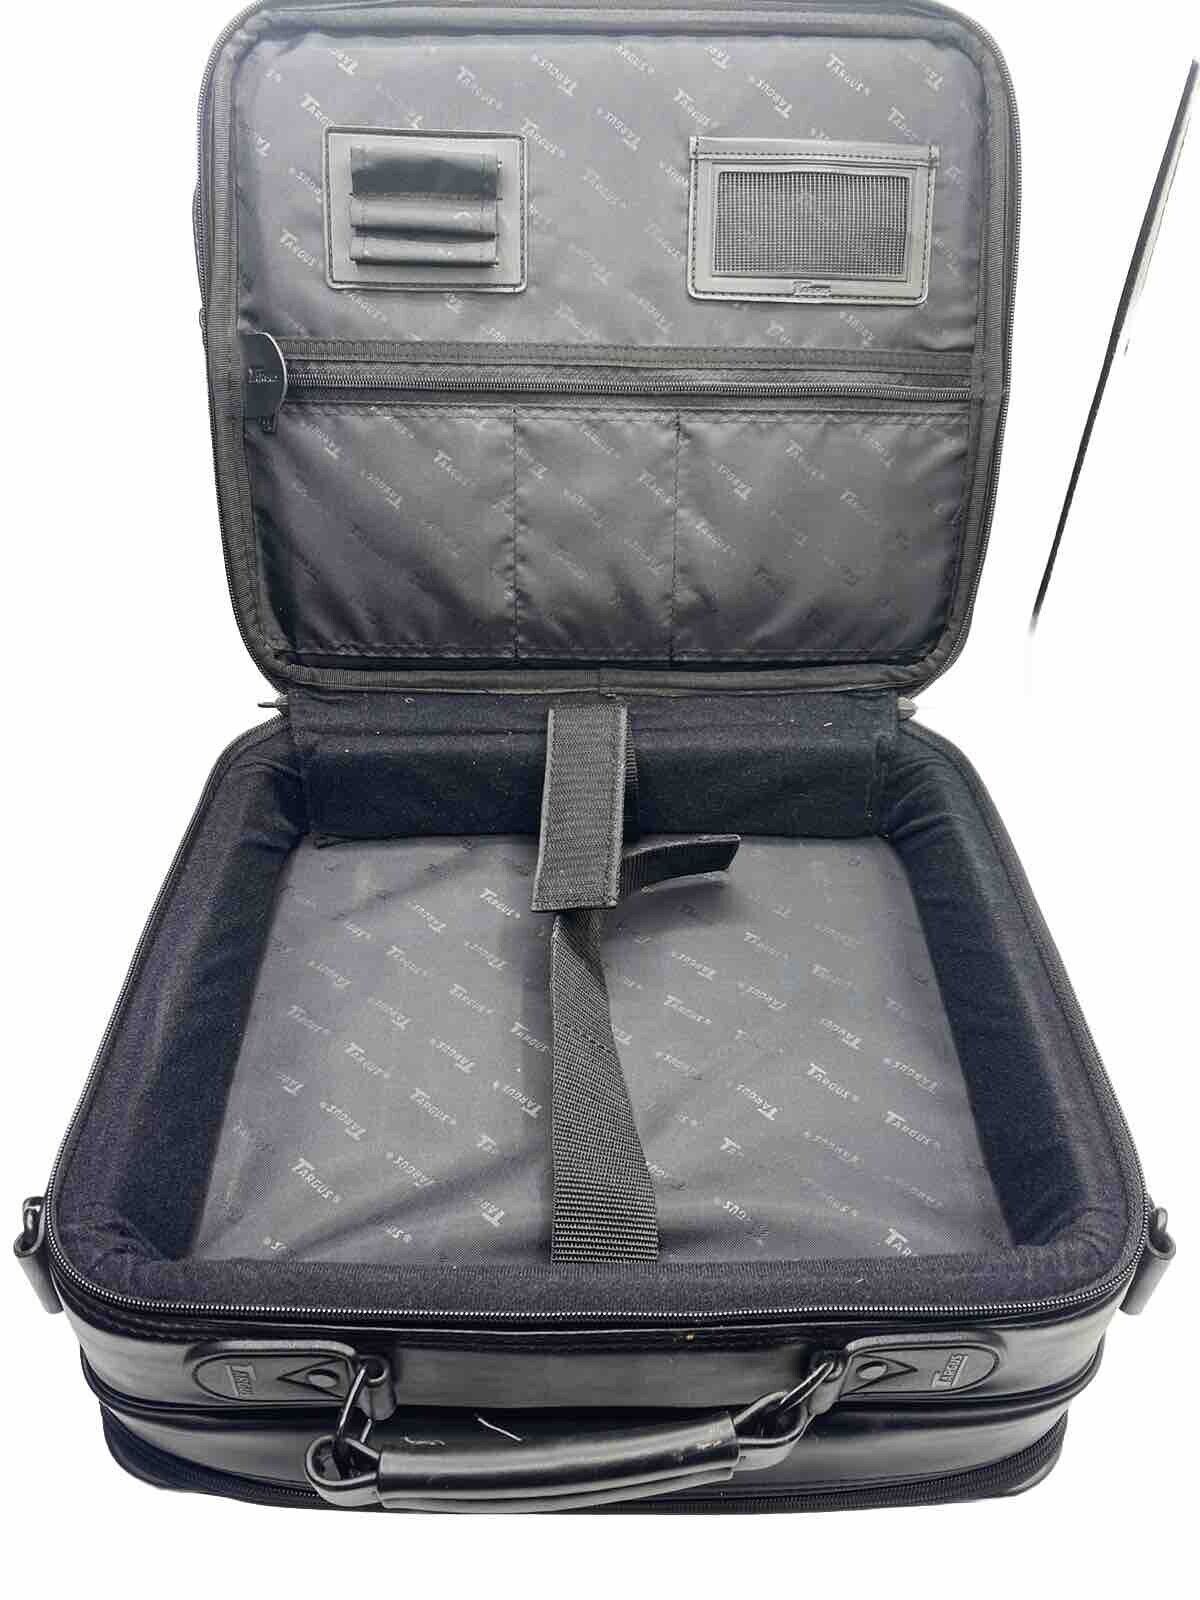 Targus CUN1/OCU2 Black Leather Padded Laptop Carry Case Bag * Missing Strap *